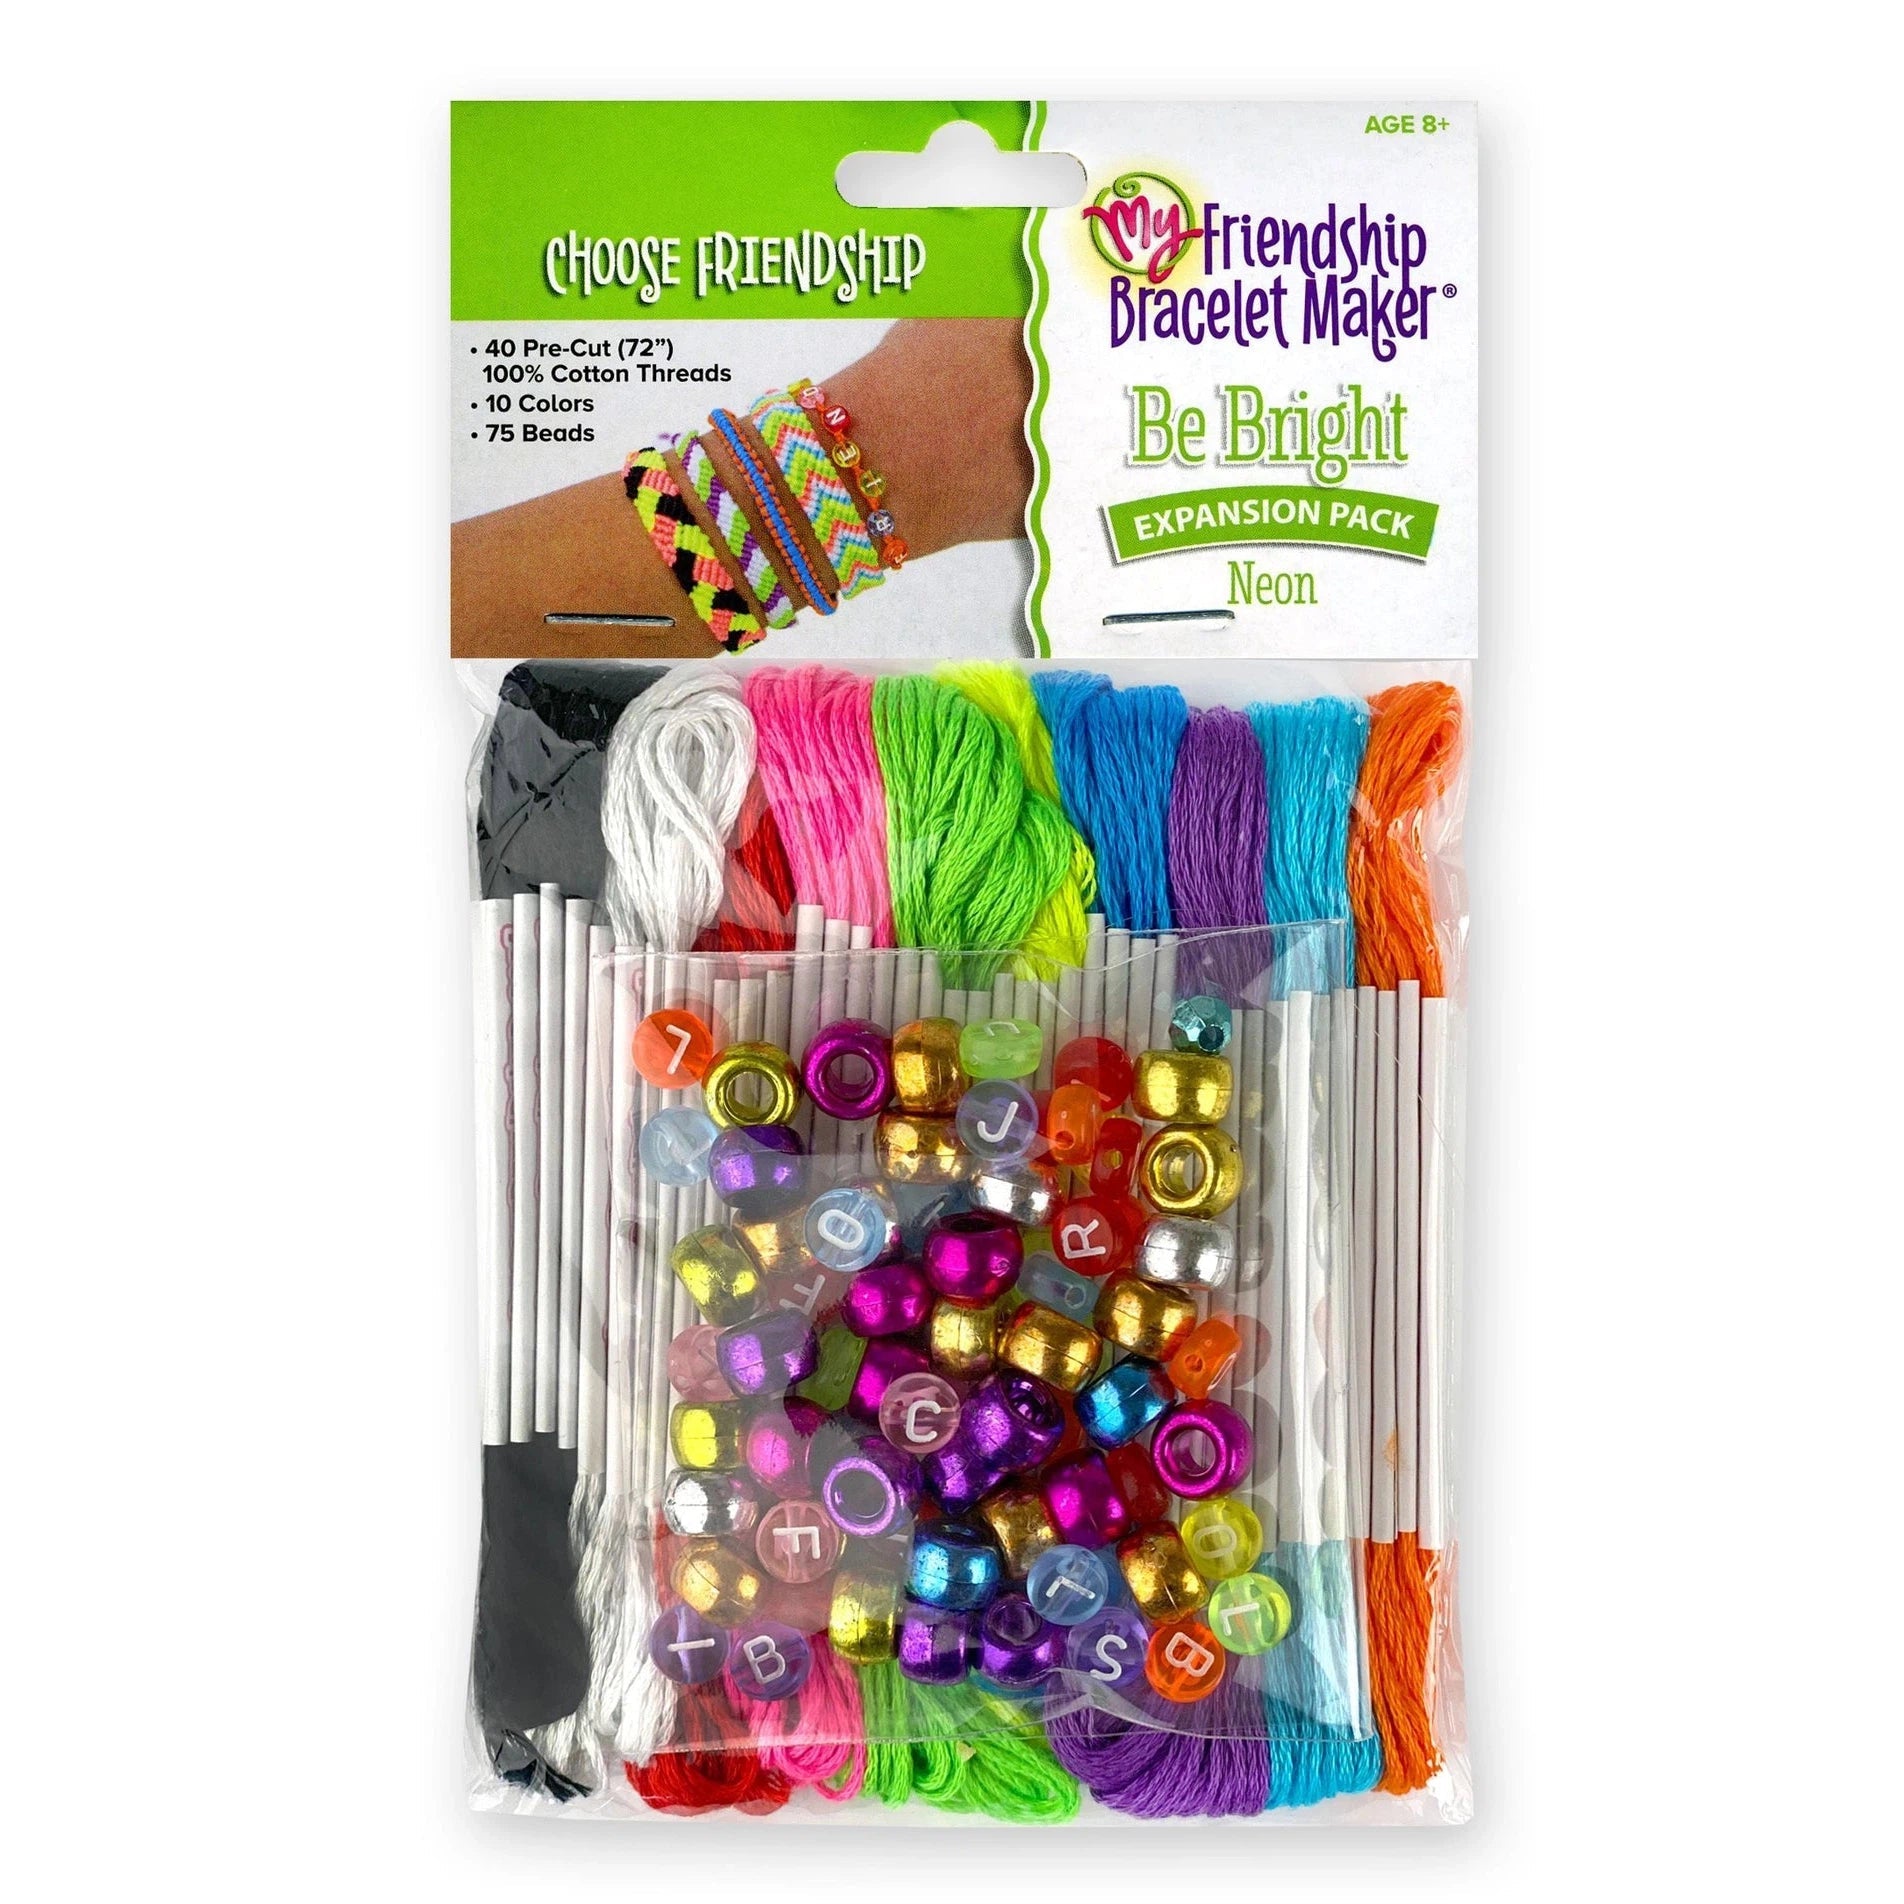 Choose Friendship, My Friendship Bracelet Maker (New and Improved), 20 Pre-Cut Threads Makes Up to 8 Bracelets